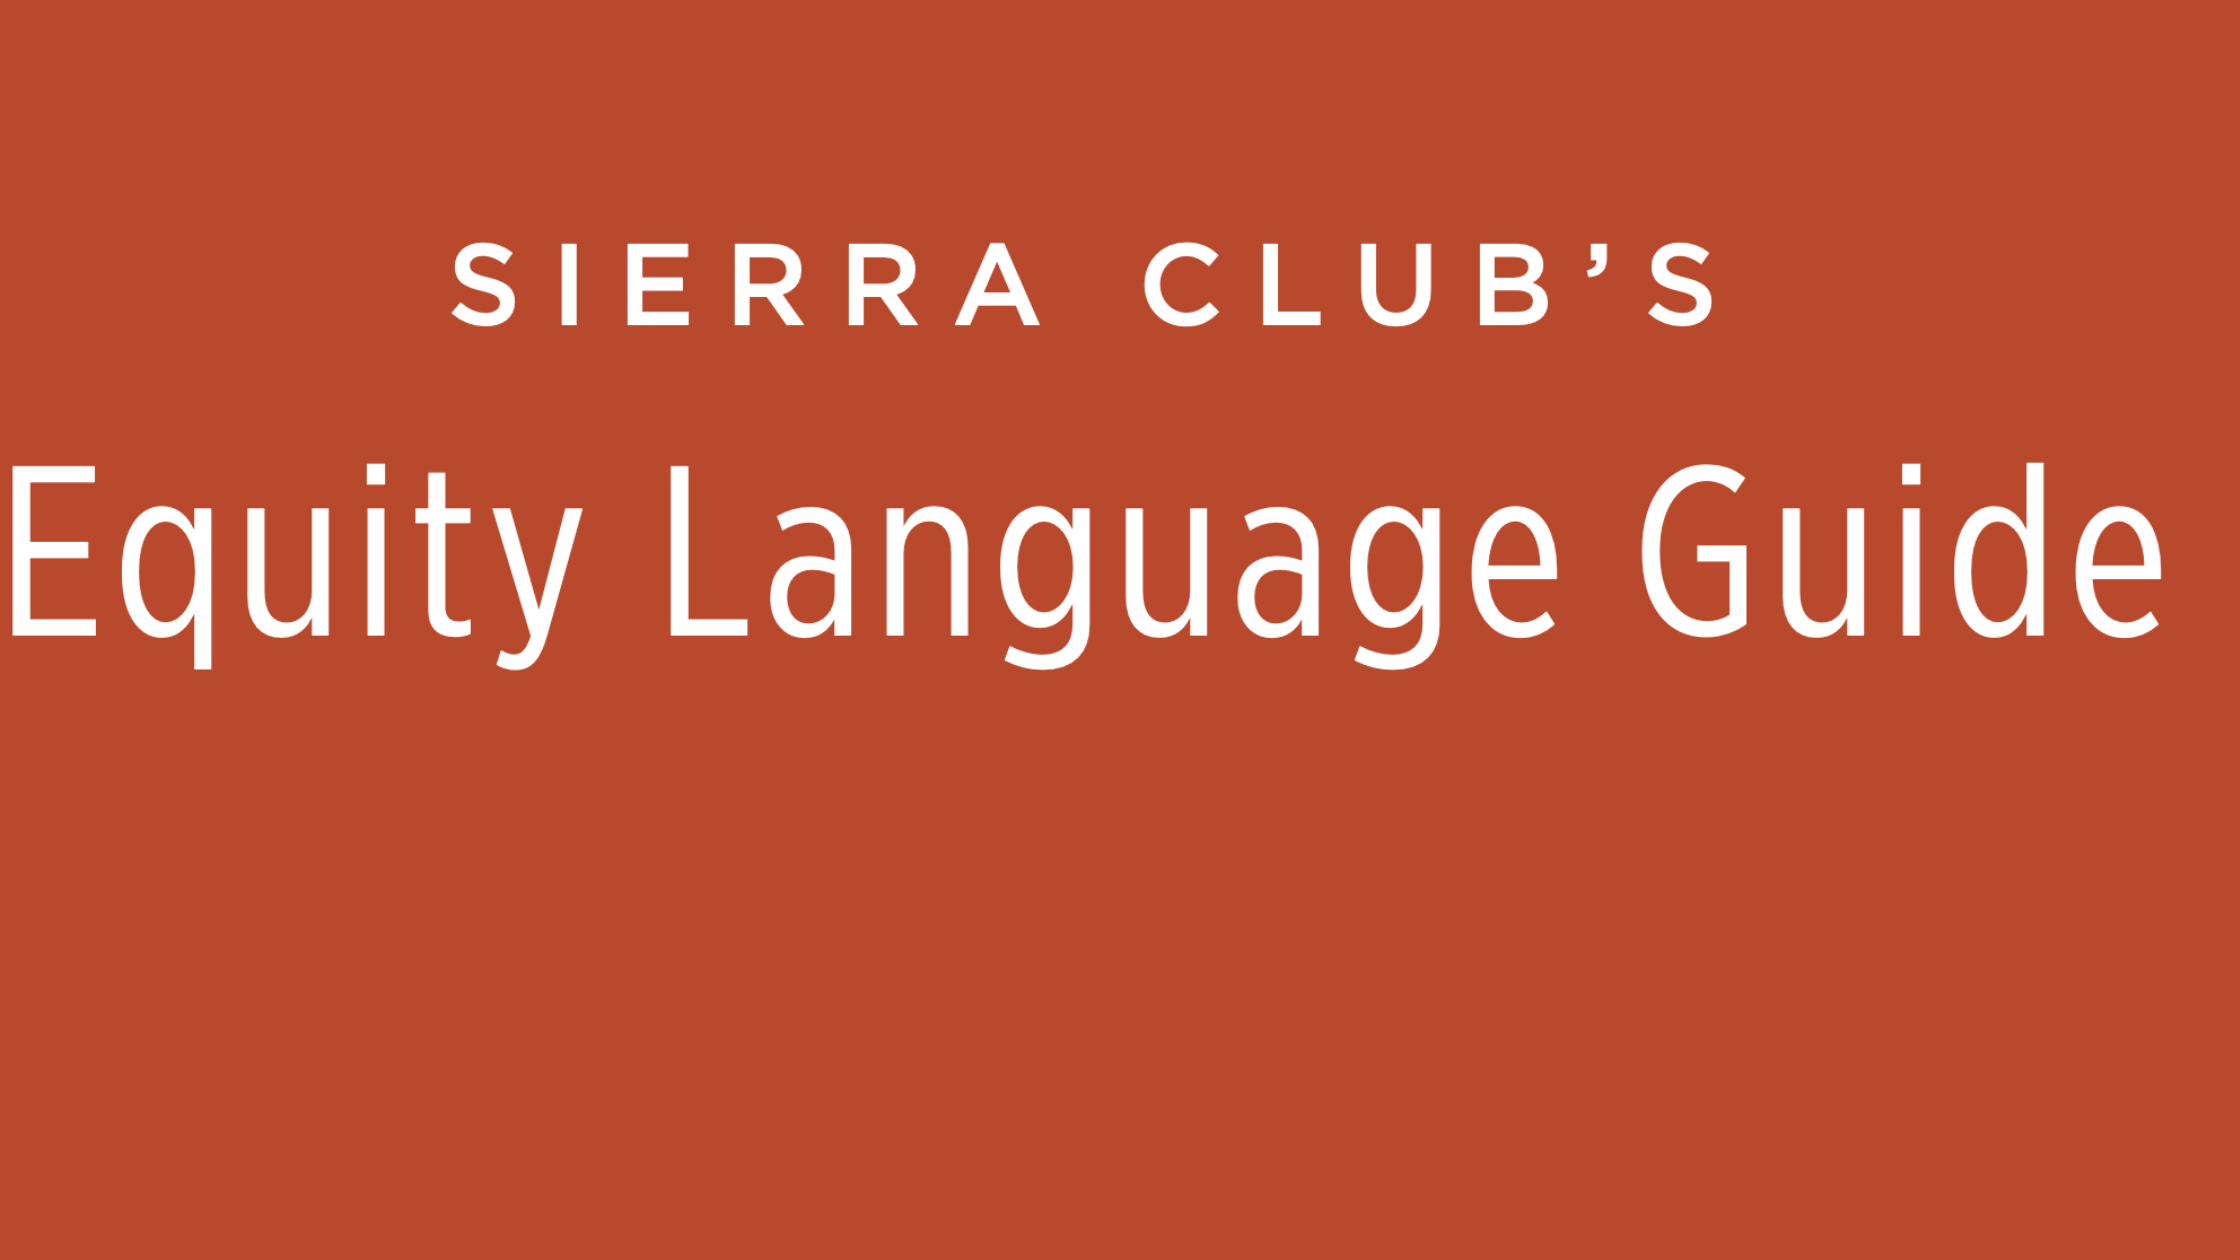 SIERRA CLUB’S Equity Language Guide